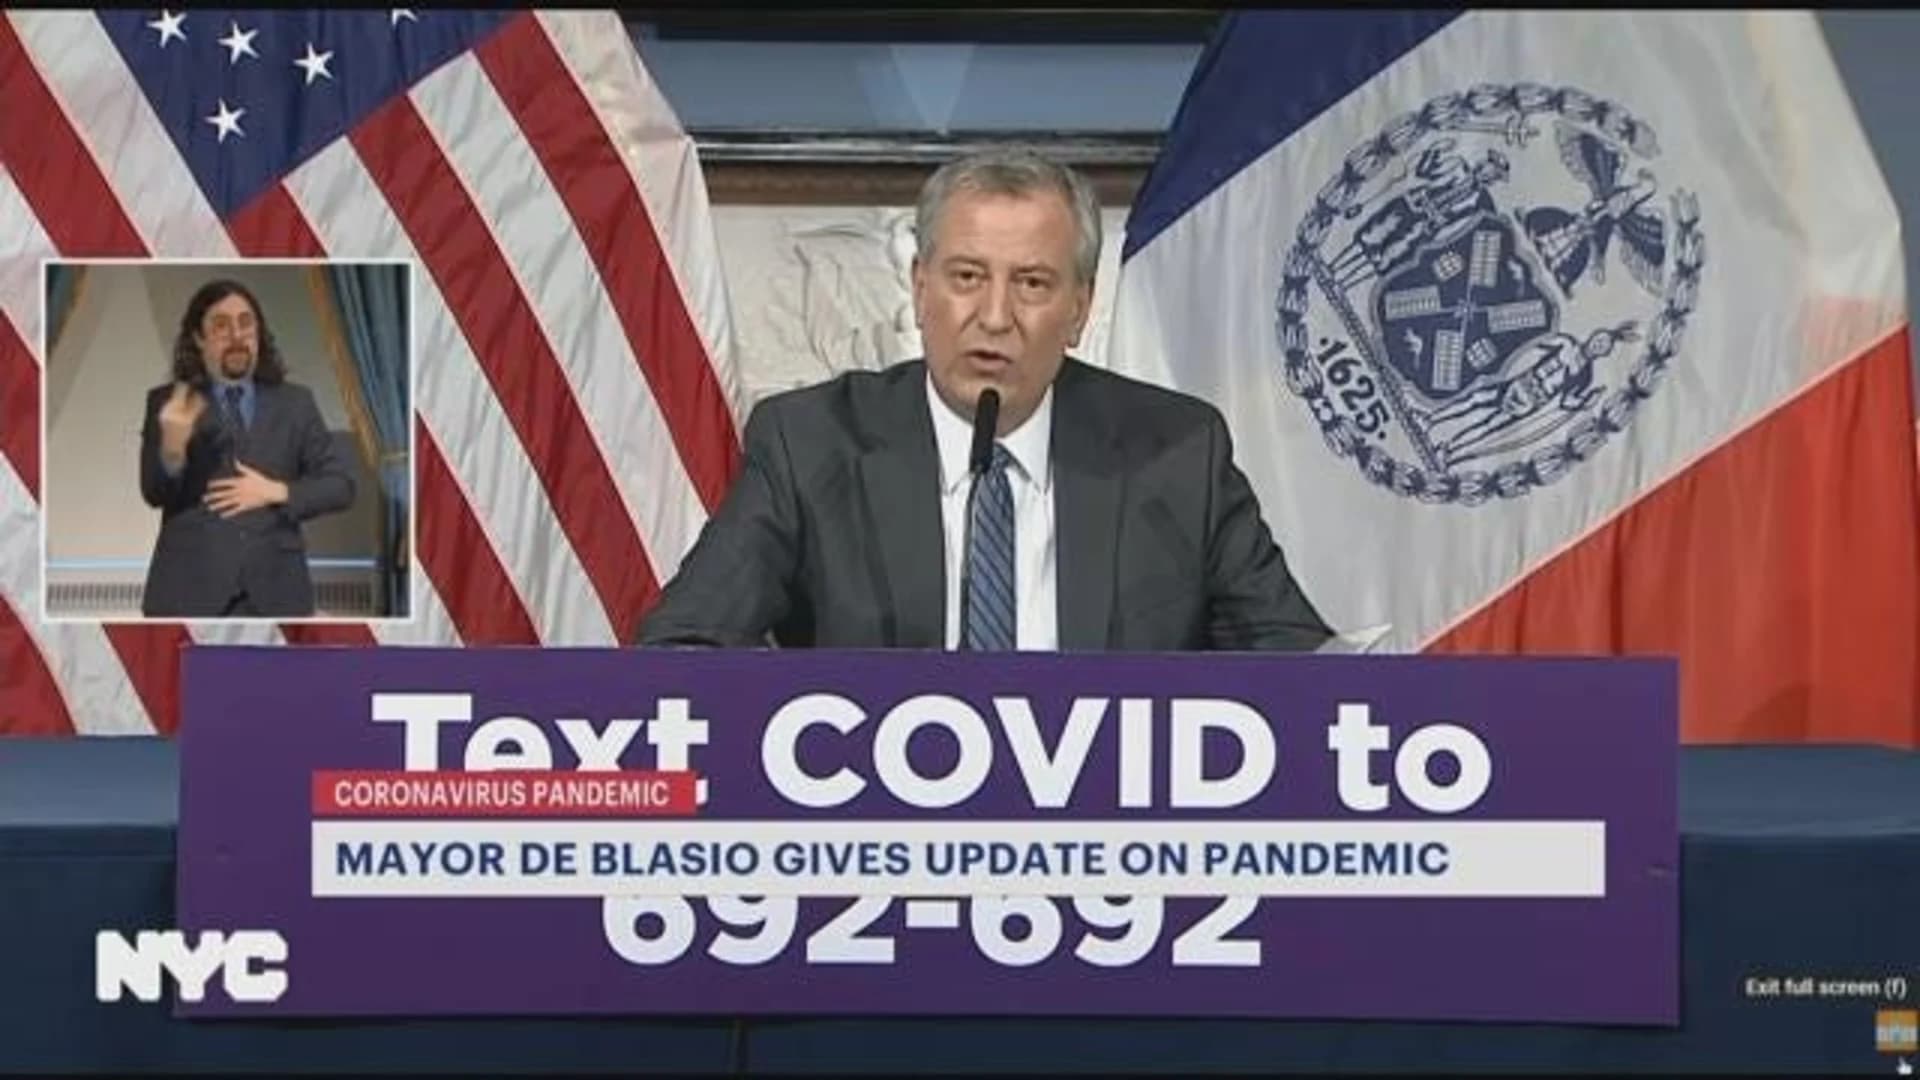 Mayor de Blasio: New York City COVID-19 cases reach 20K, 280 deaths